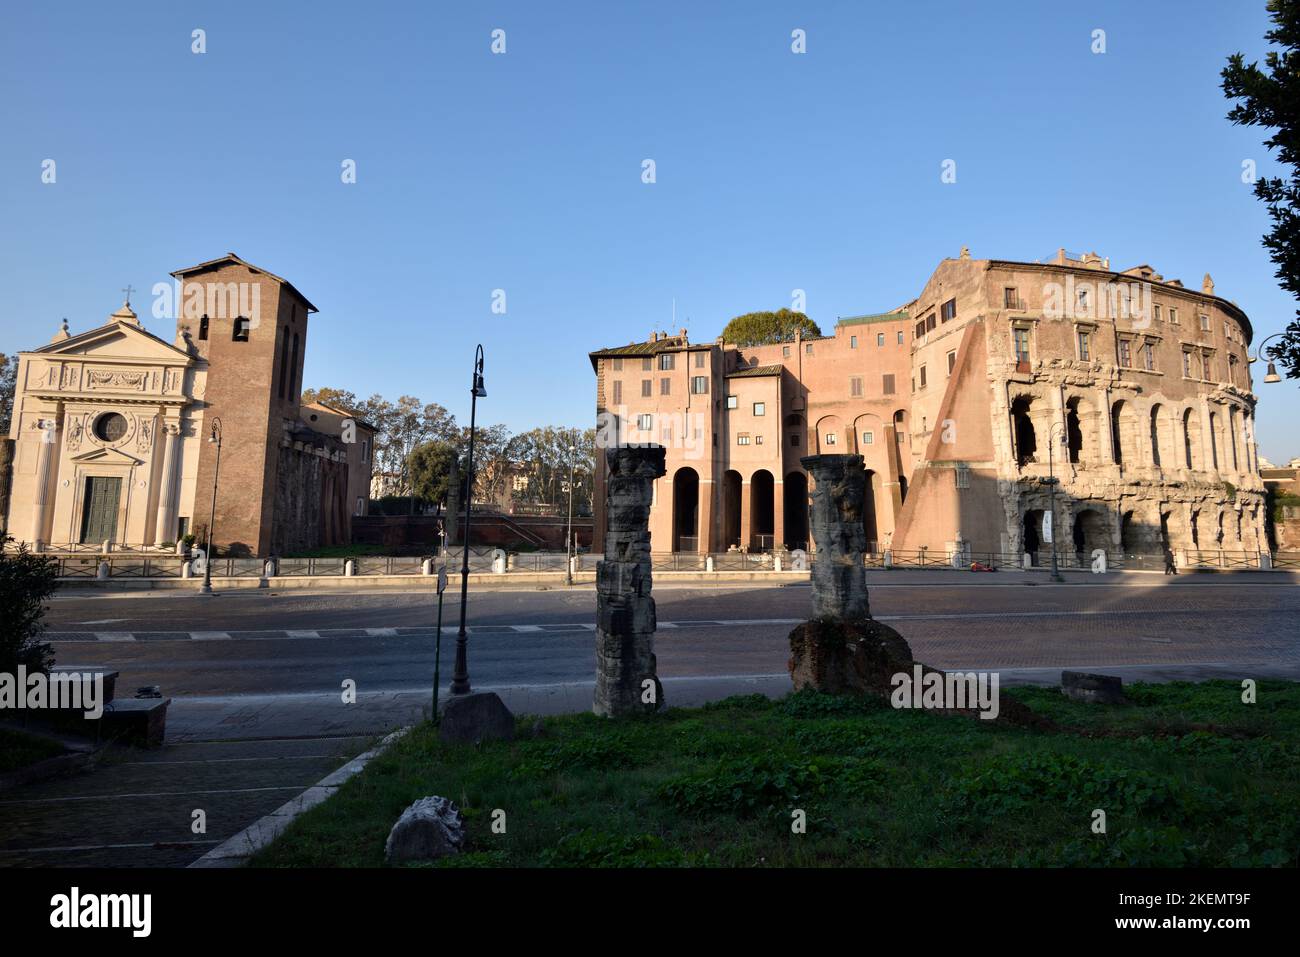 italie, rome, via del teatro di marcello, église de san nicola à carcere et palais orsini (teatro di marcello) Banque D'Images